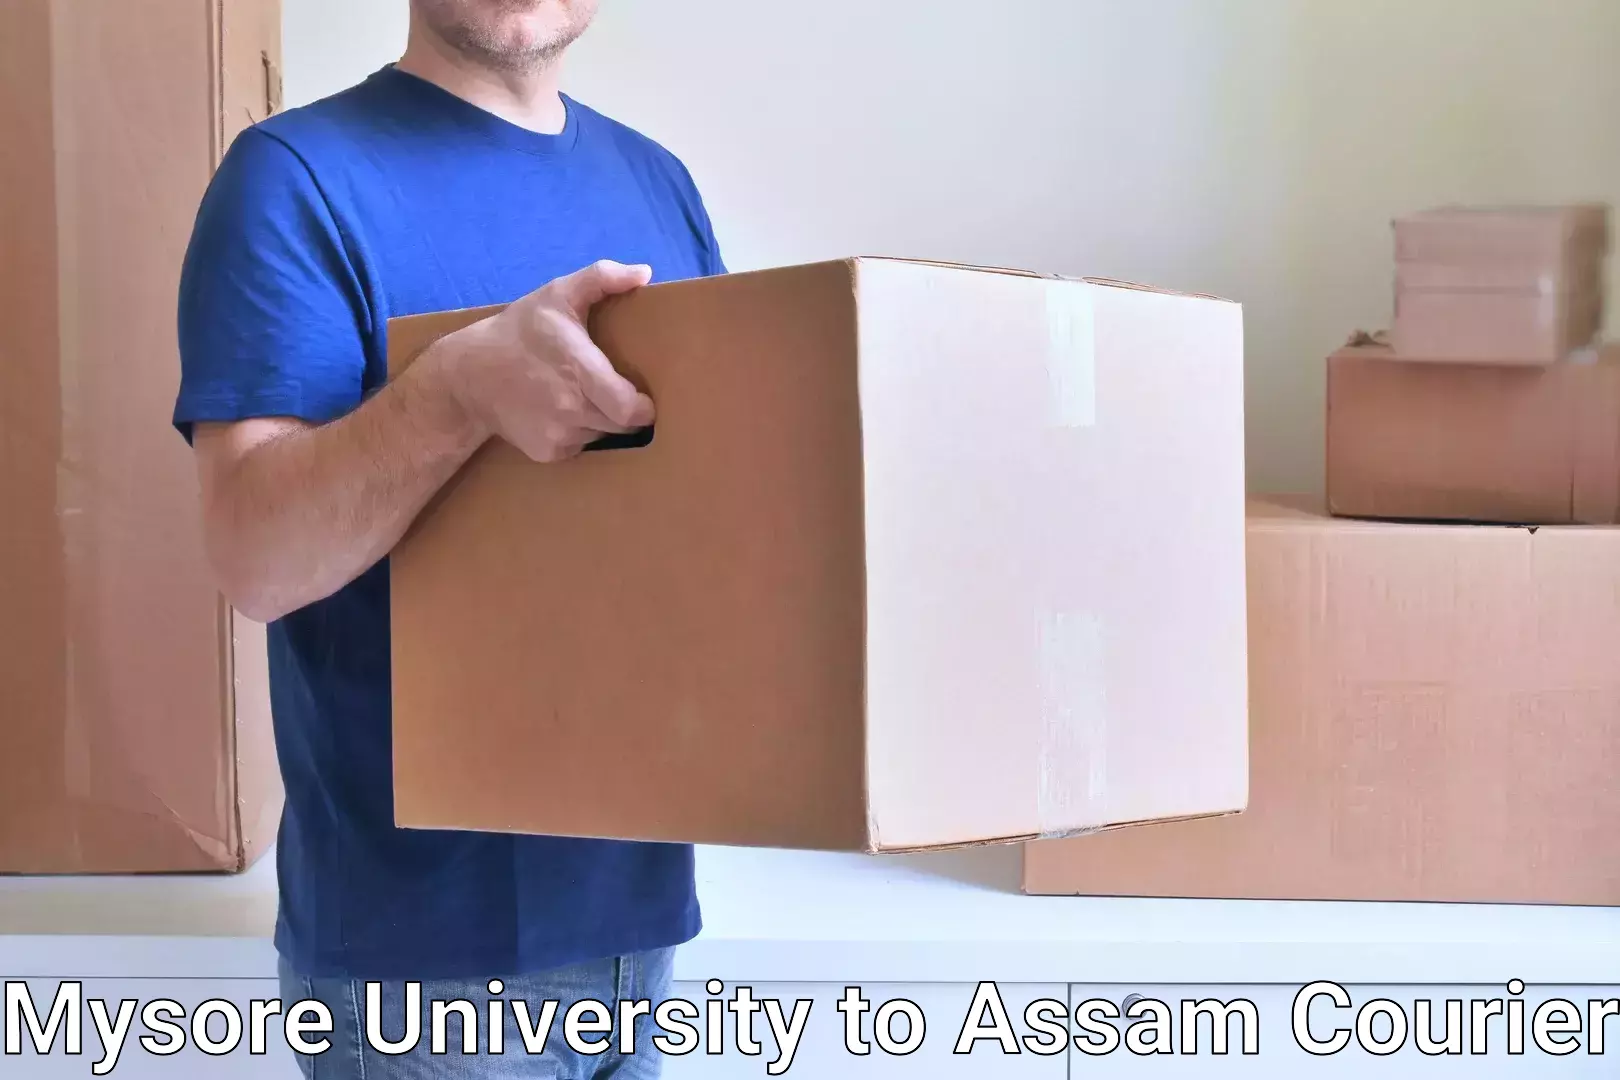 Courier service efficiency Mysore University to Assam